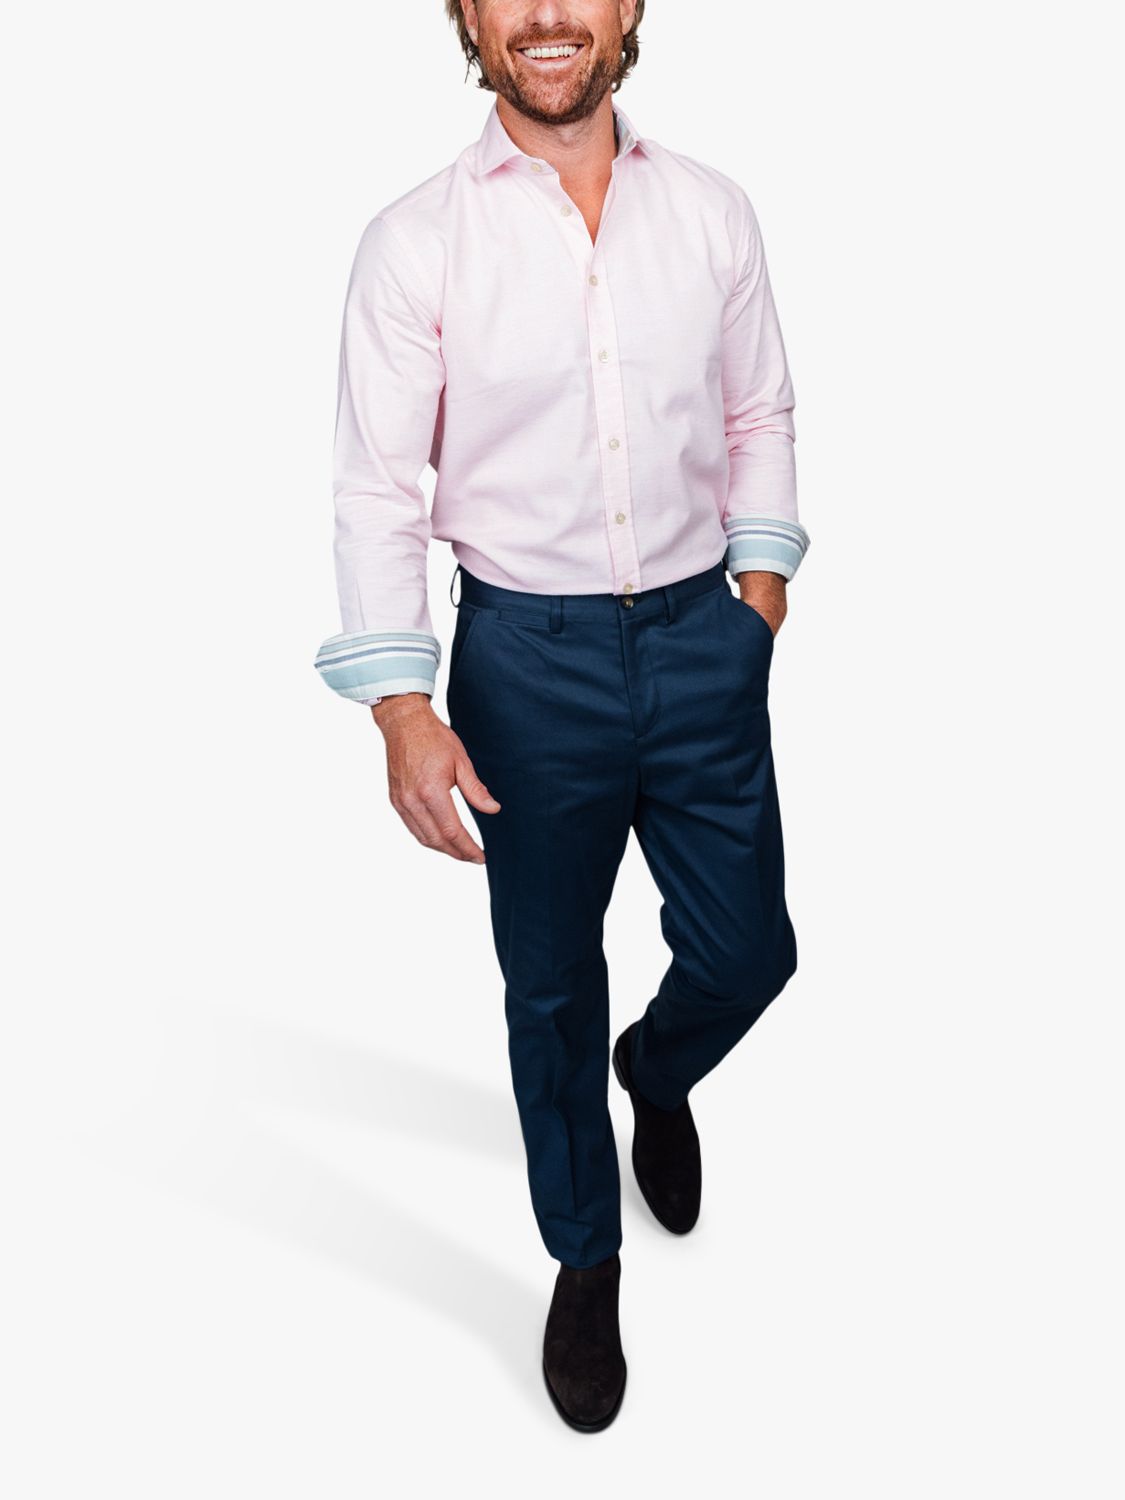 KOY Luxury Cotton Cashmere Blend Shirt, Mid Pink, S